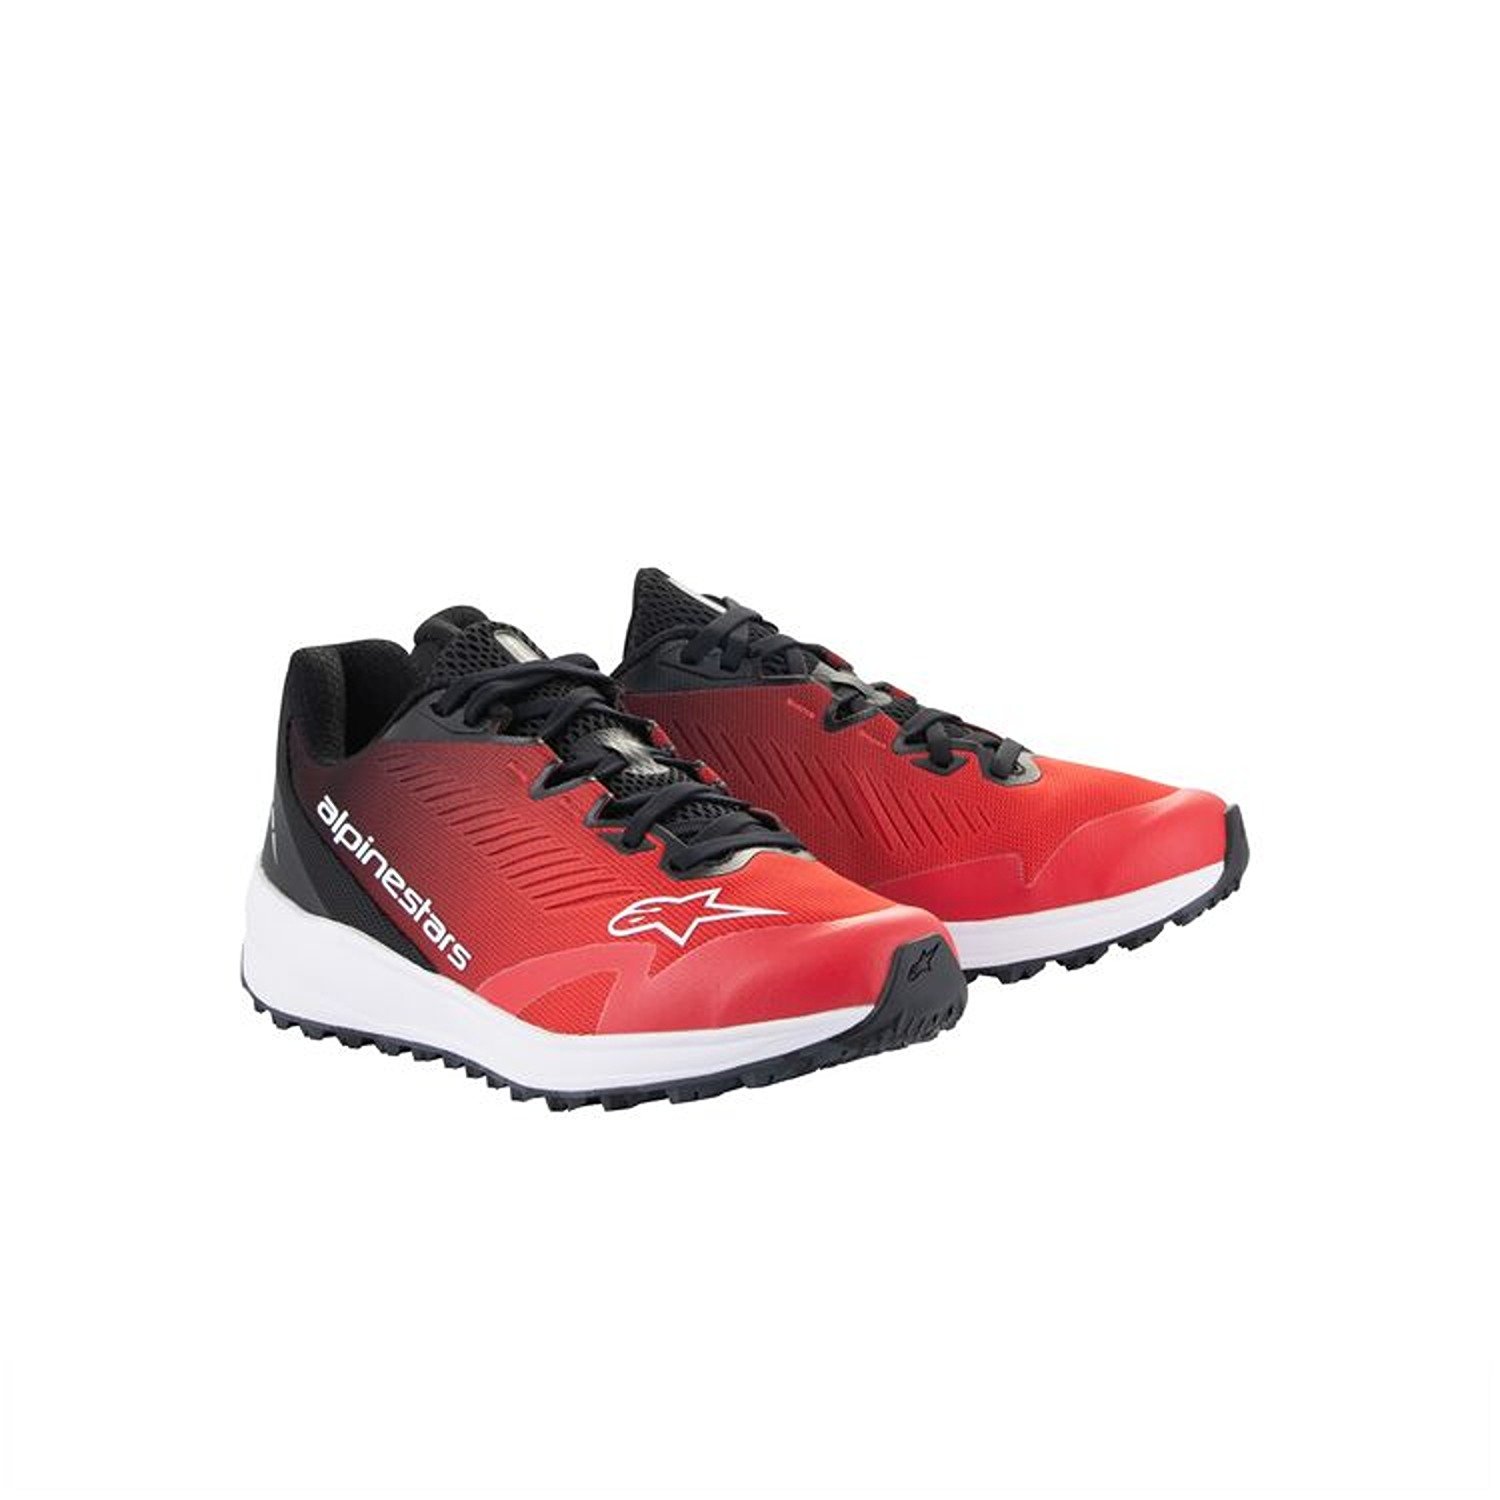 Image of Alpinestars Meta Road V2 Shoes Red Black White Size US 13 EN